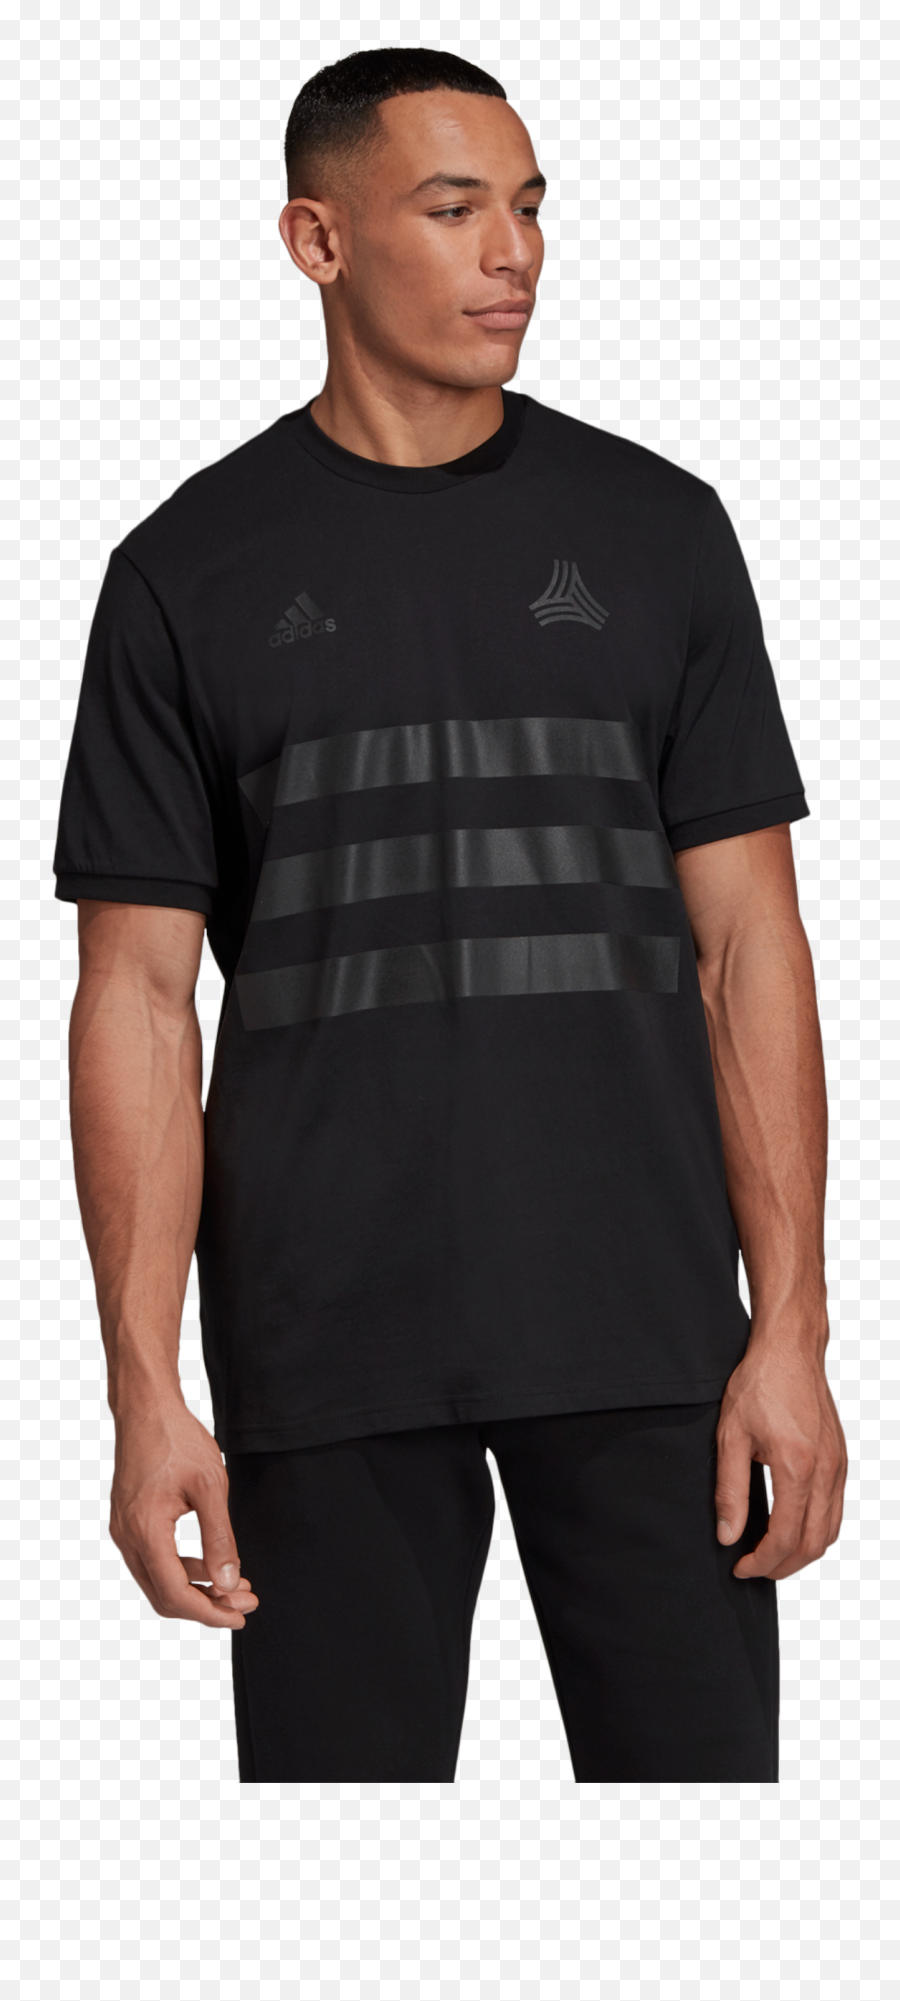 Adidas Tango T Shirt Online Shopping Mall Find The Best Emoji,Adidas Logo T Shirt